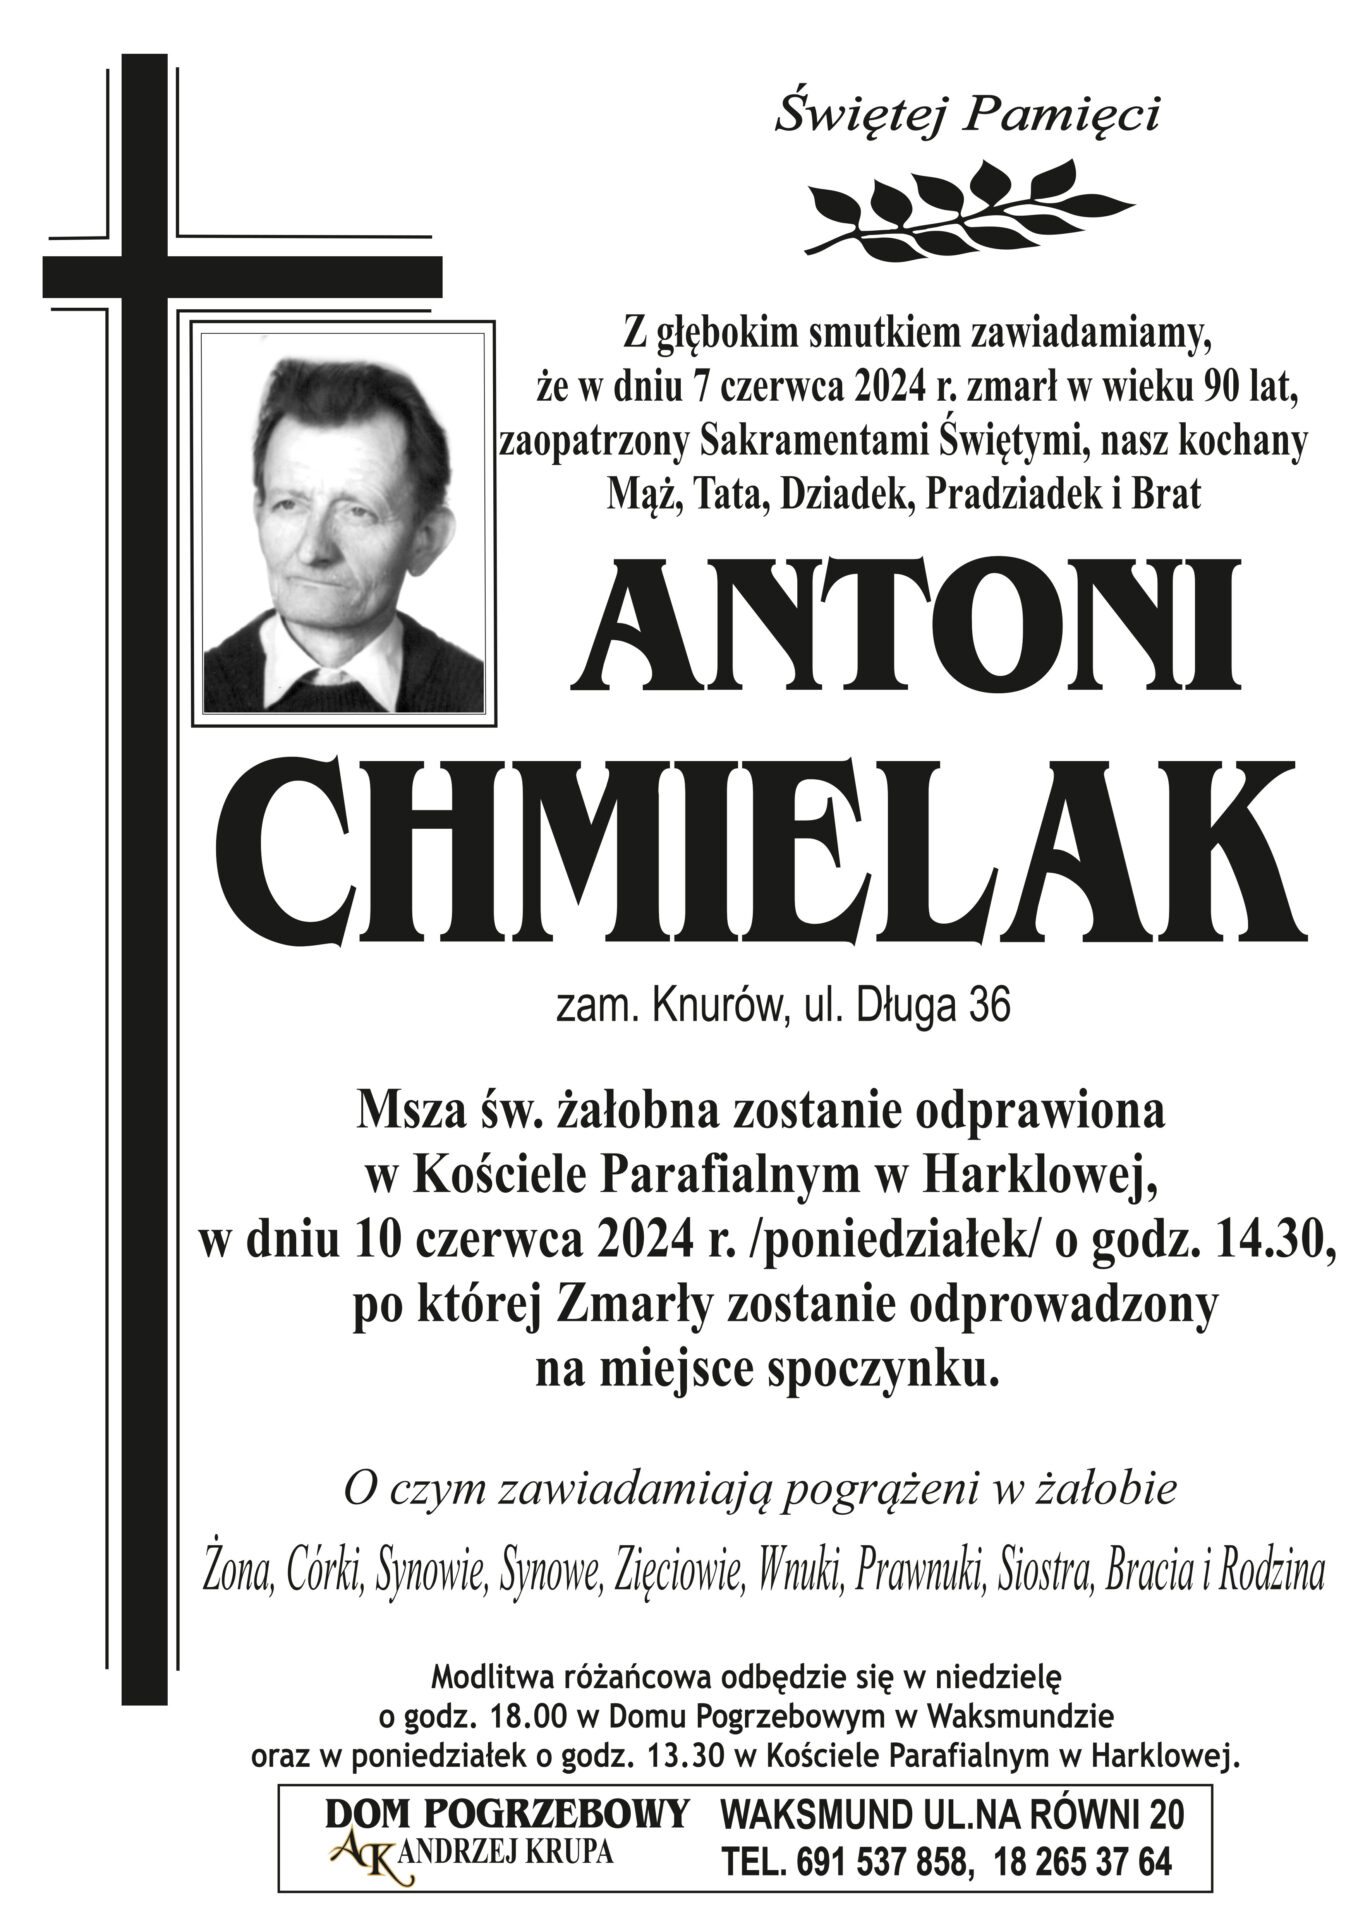 Antoni Chmielak